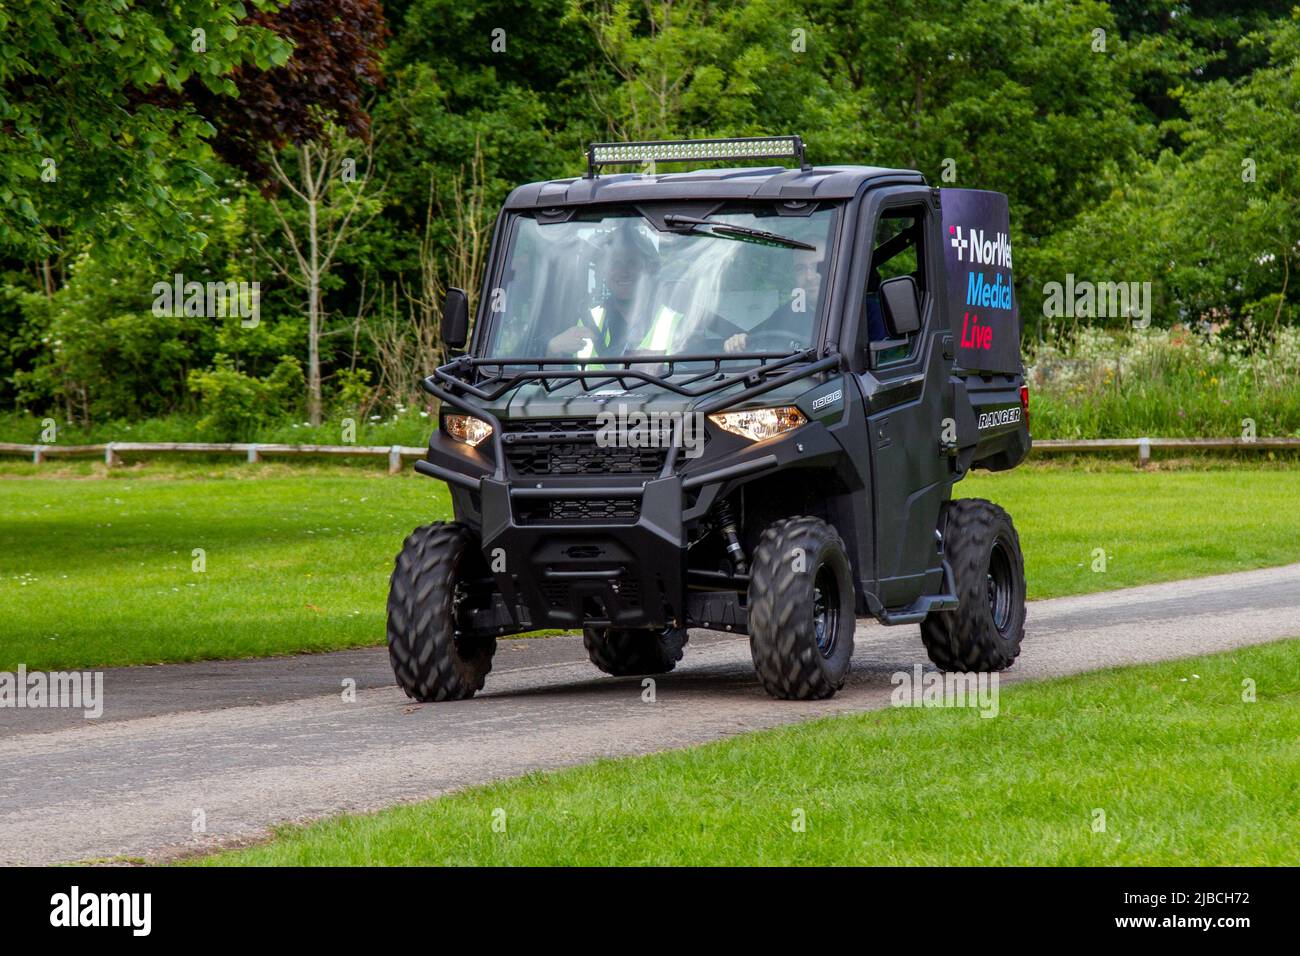 Polaris 1000 Ranger Medical Utility Vehicle; Norwest Medical Live Response Vehicle; Ankunft in worden Park Motor Village für das Leyland Festival, Großbritannien Stockfoto